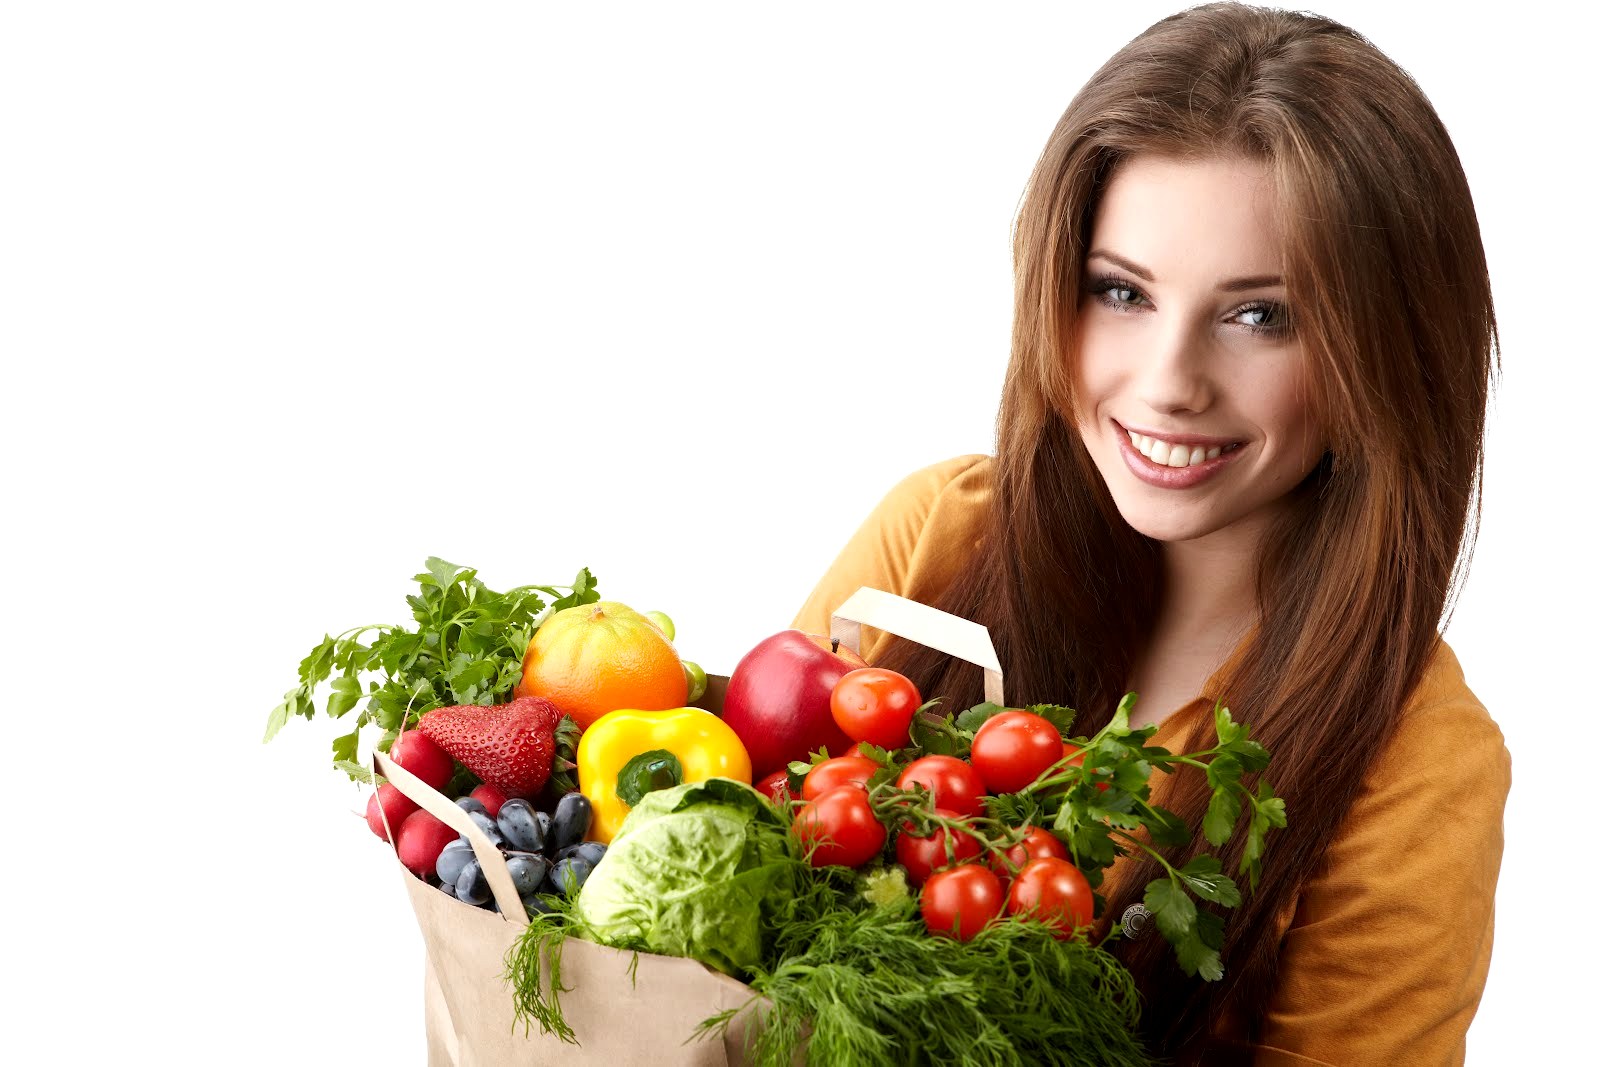 Eating Fruits and Vegetables for Dental Health